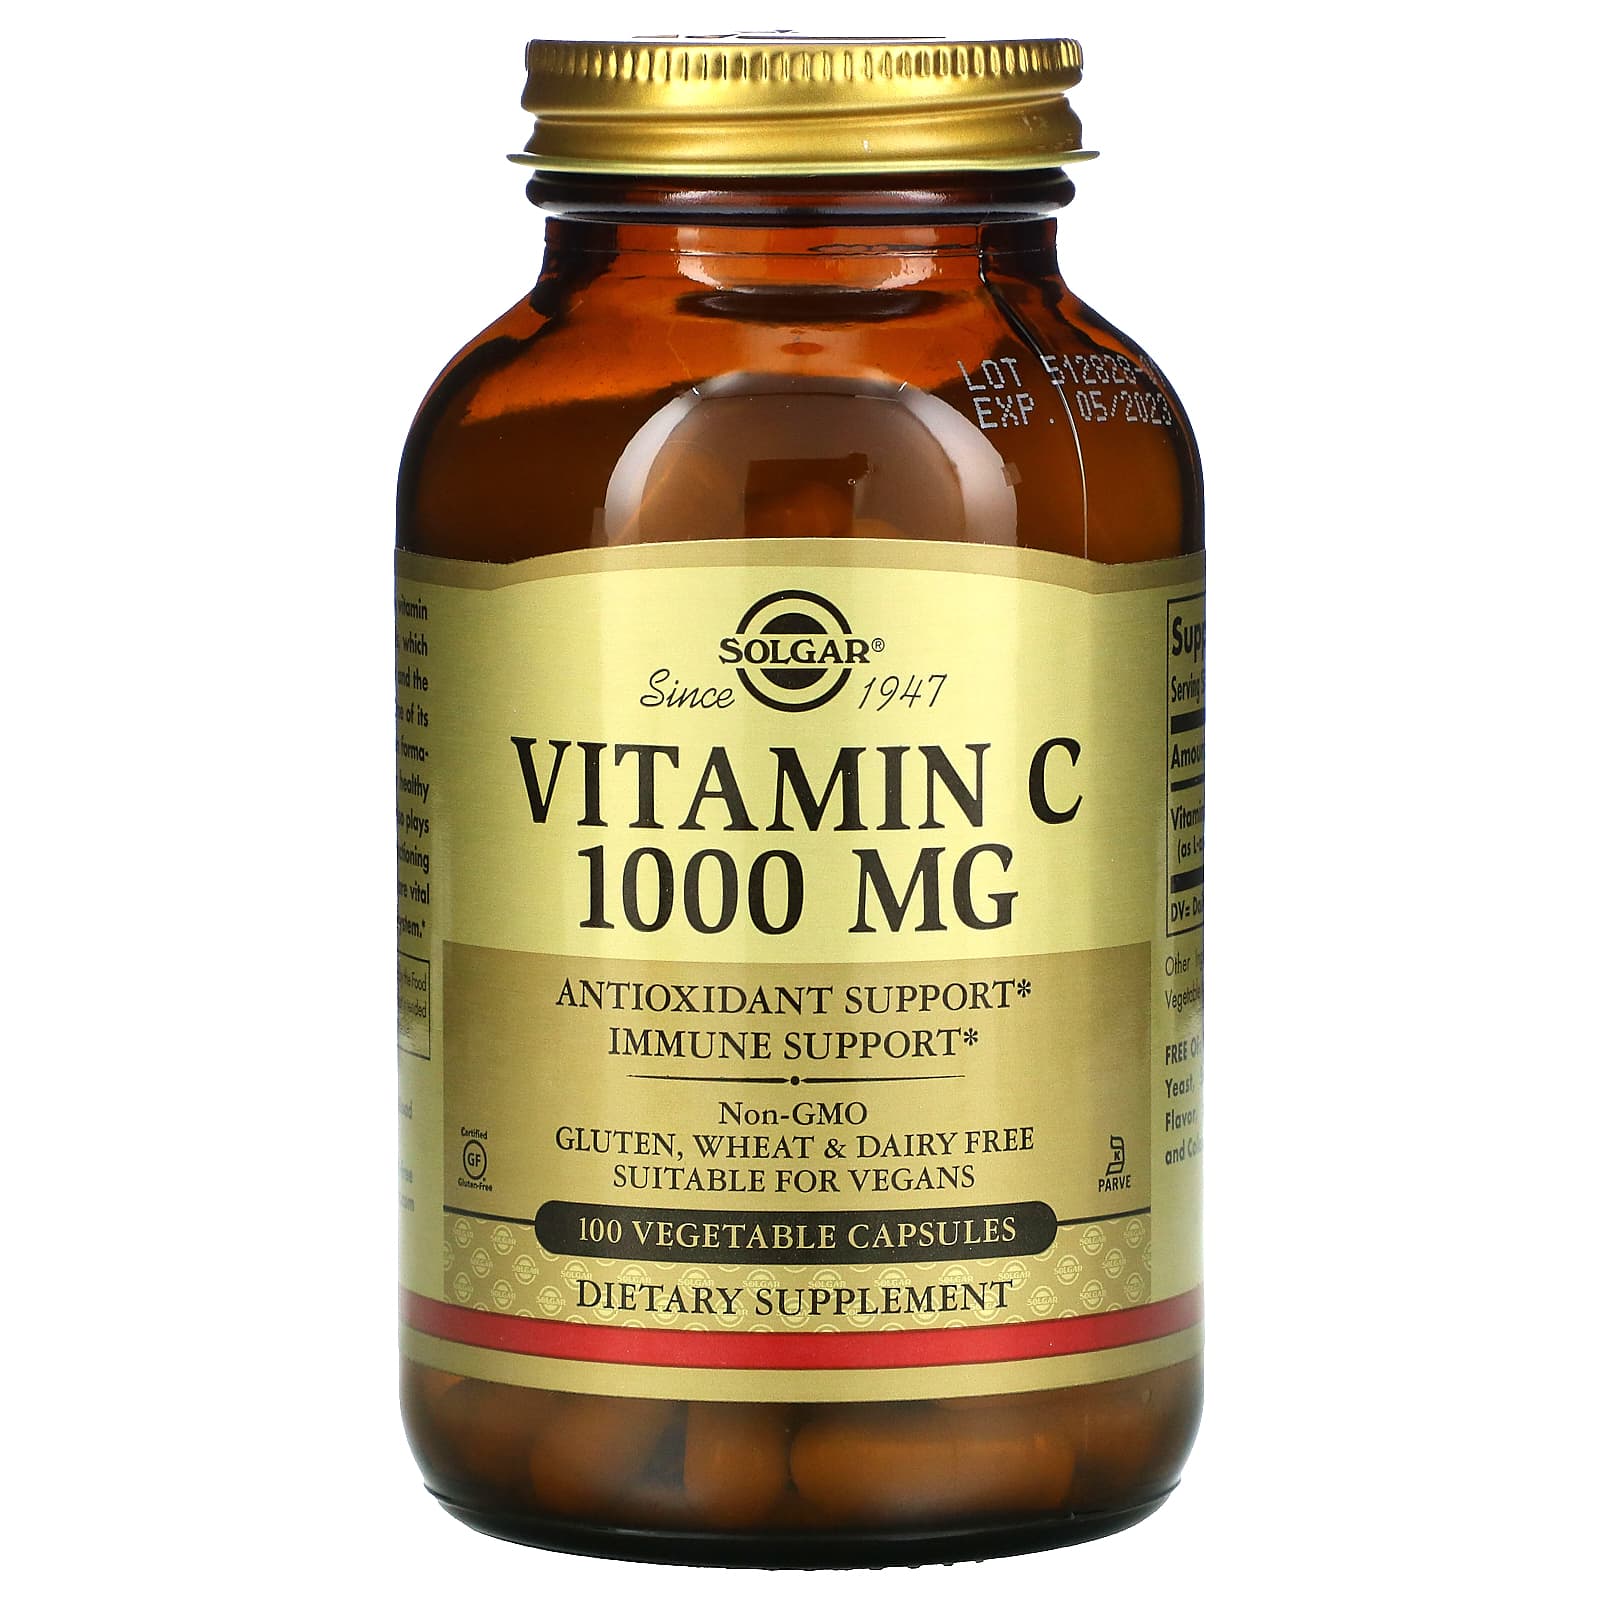 Solgar Vitamin C 1000 Mg, 100 Vegetable Capsules